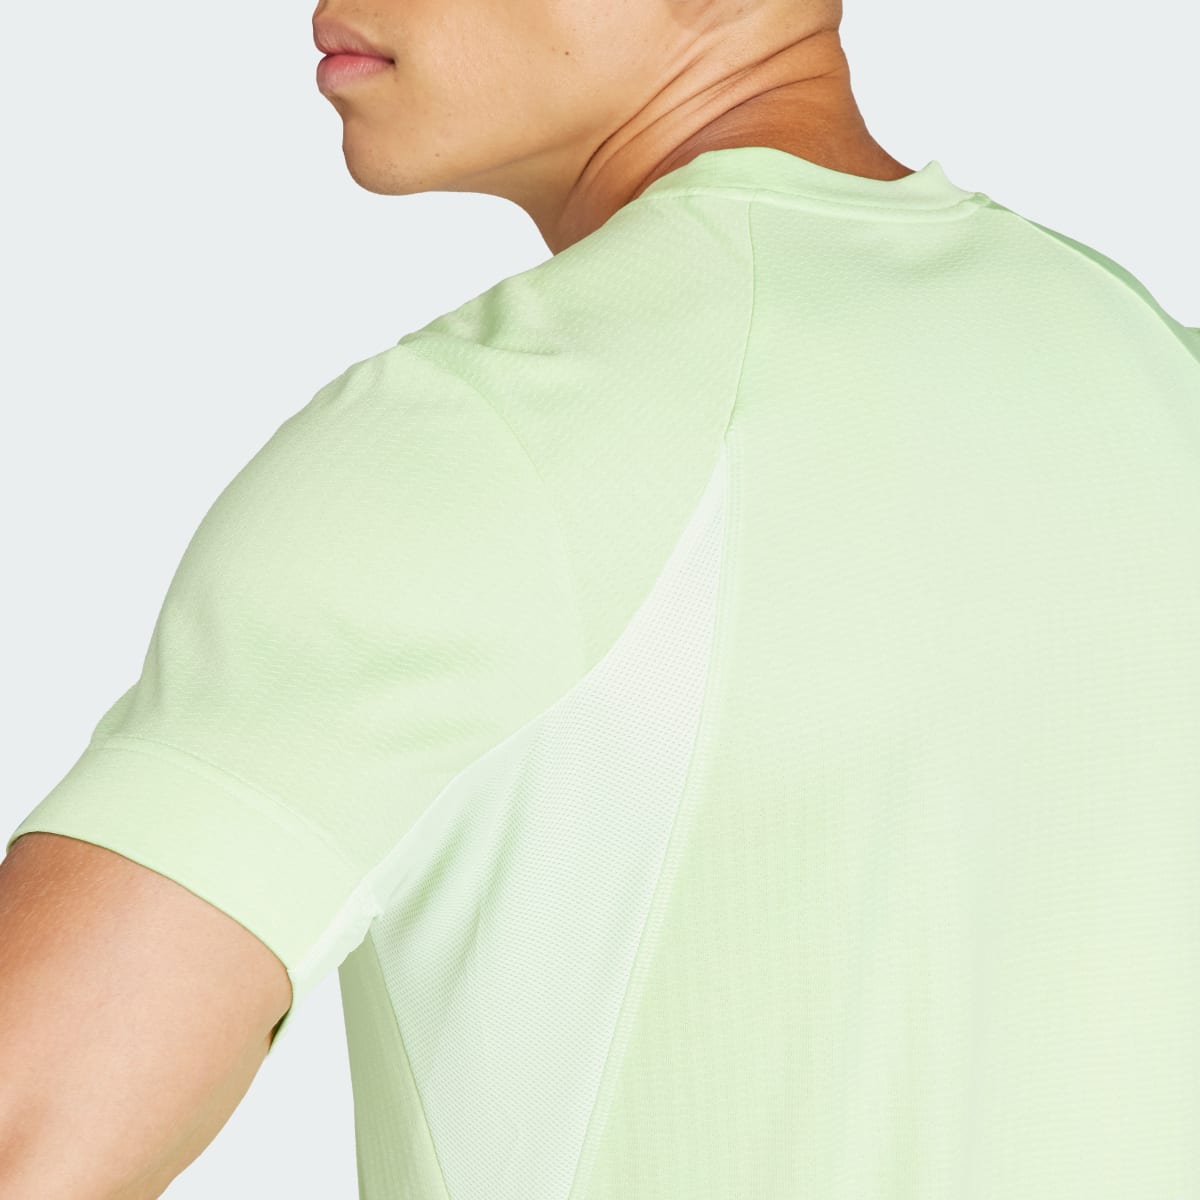 Adidas Tennis FreeLift T-Shirt. 7